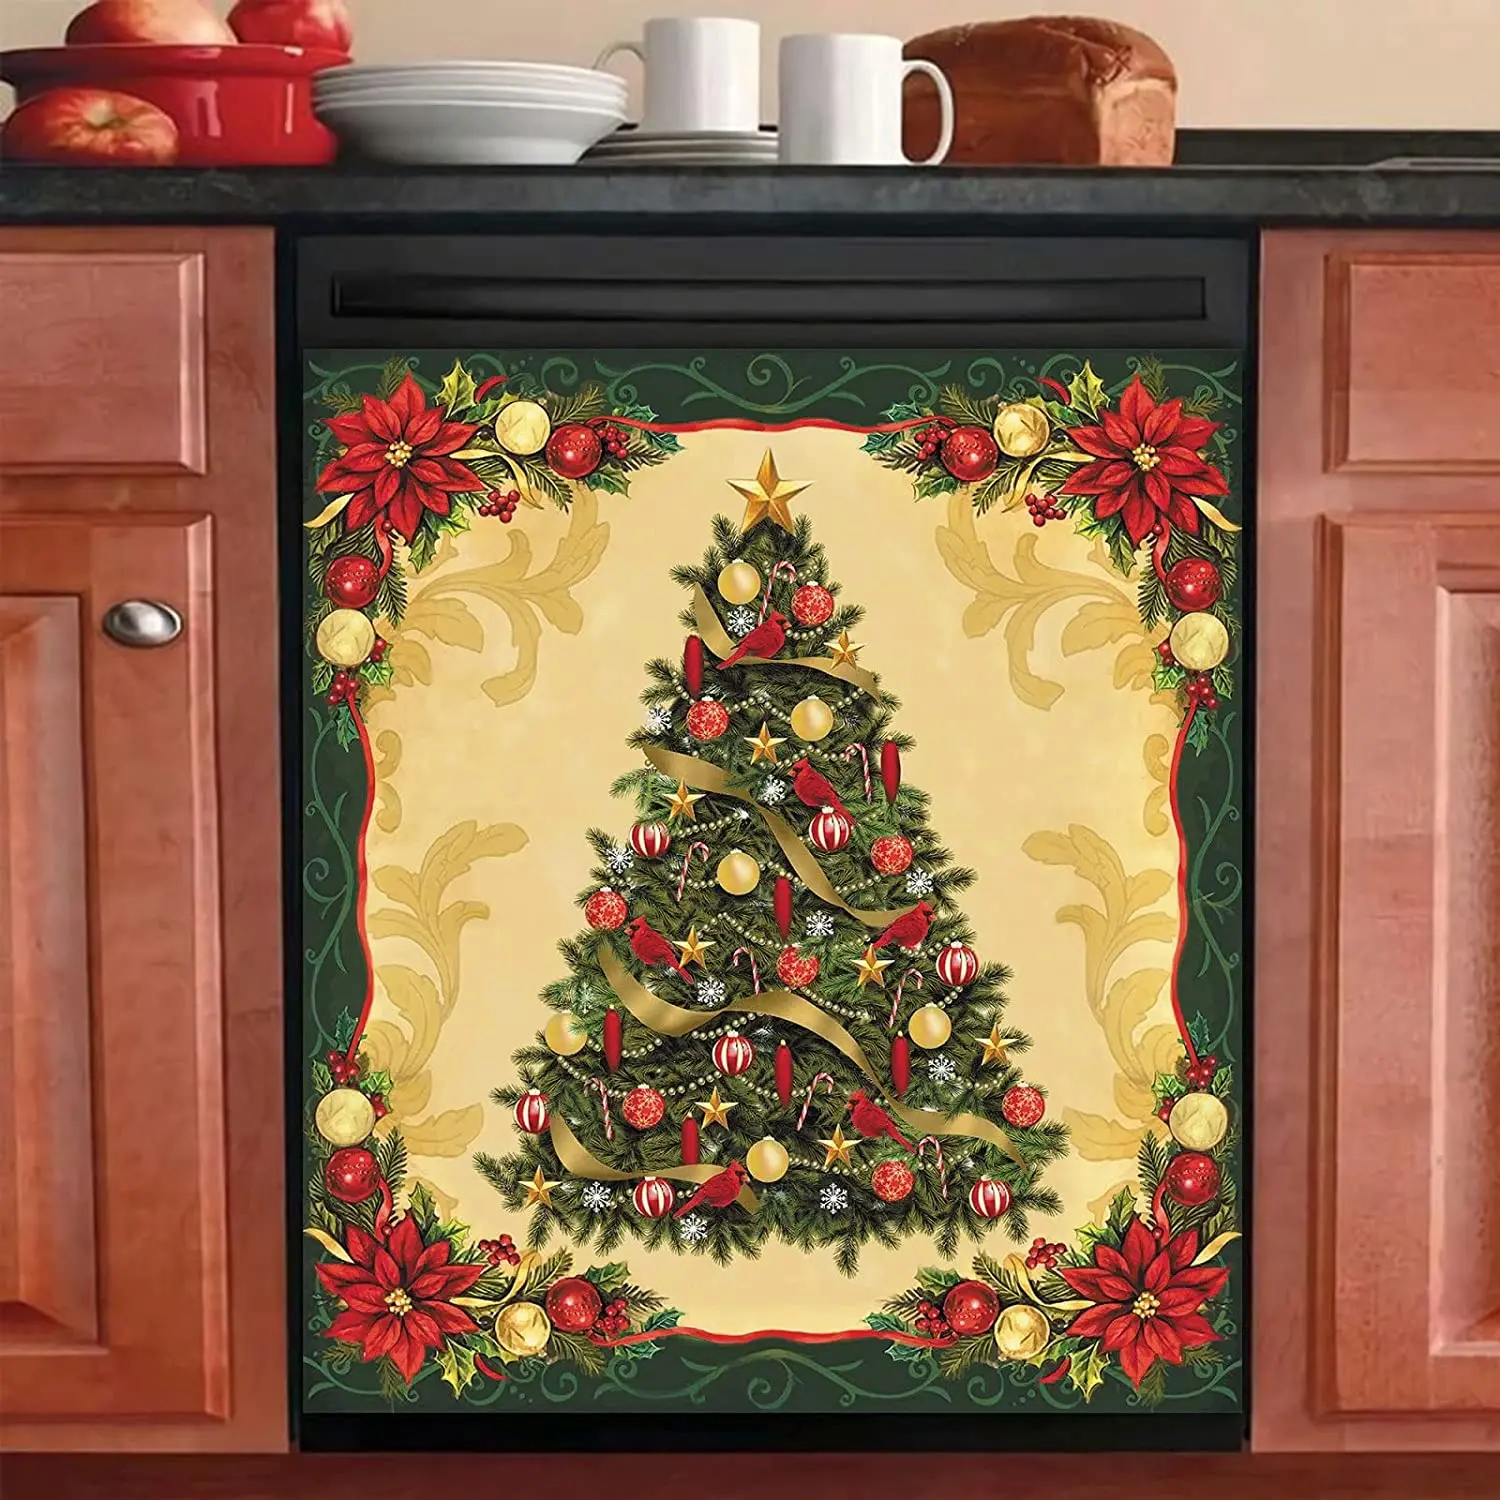 

Christmas Tree Magnetic Dishwasher Cover Panel, Vintage Christmas Decorations Magnet Refrigerator Frames Vinyl Decals for Home 2